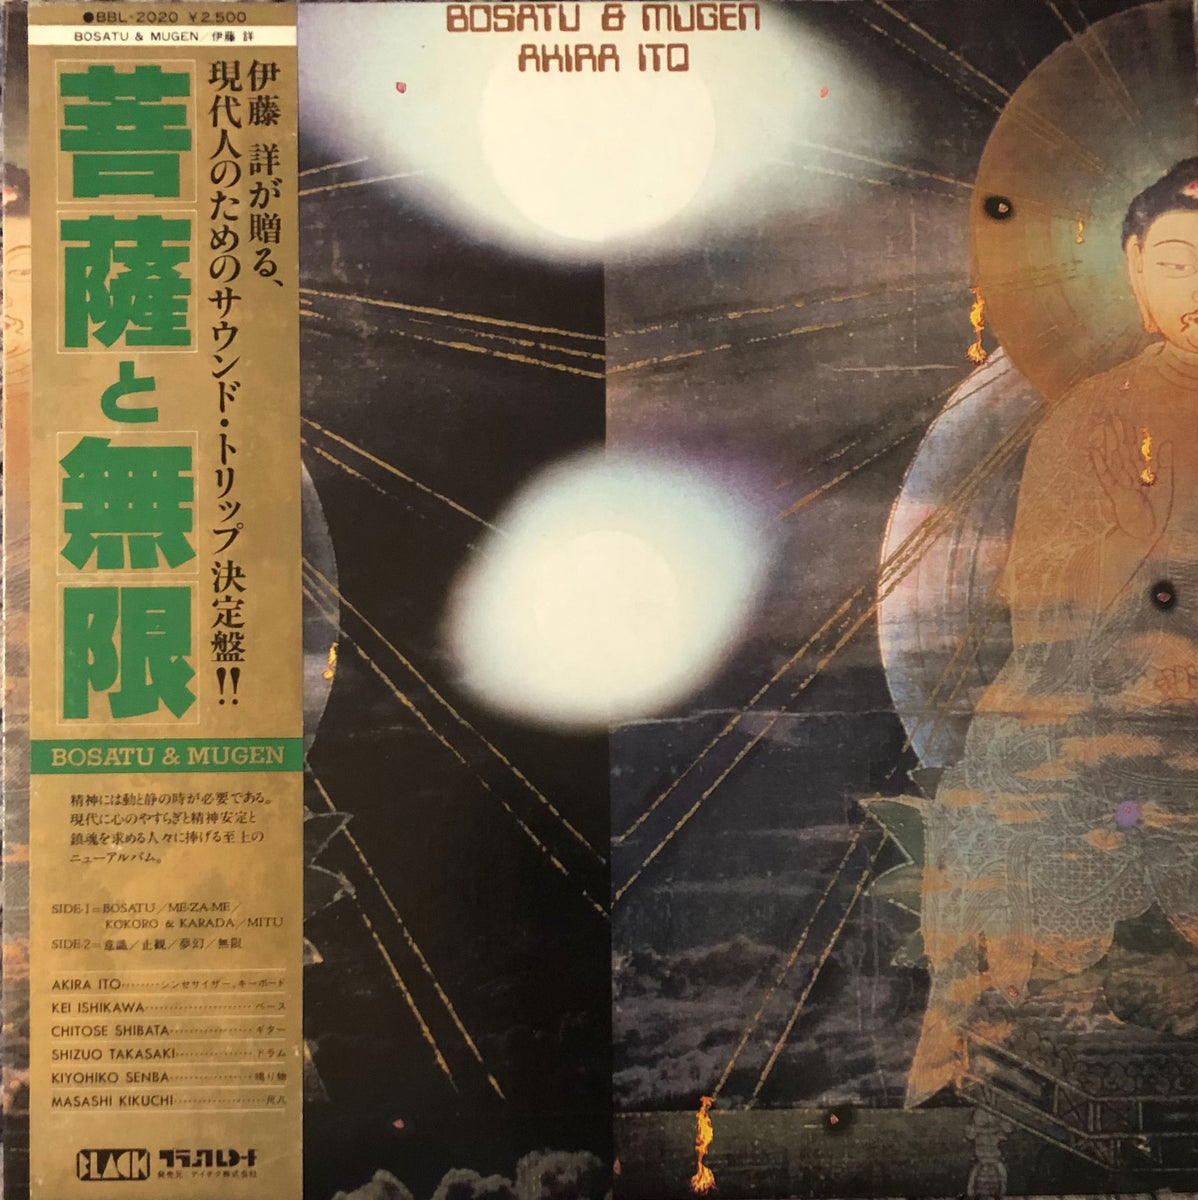 Akira Ito = 伊藤詳 - Bosatu & Mugen = 菩薩と無限 – Galapagos Records